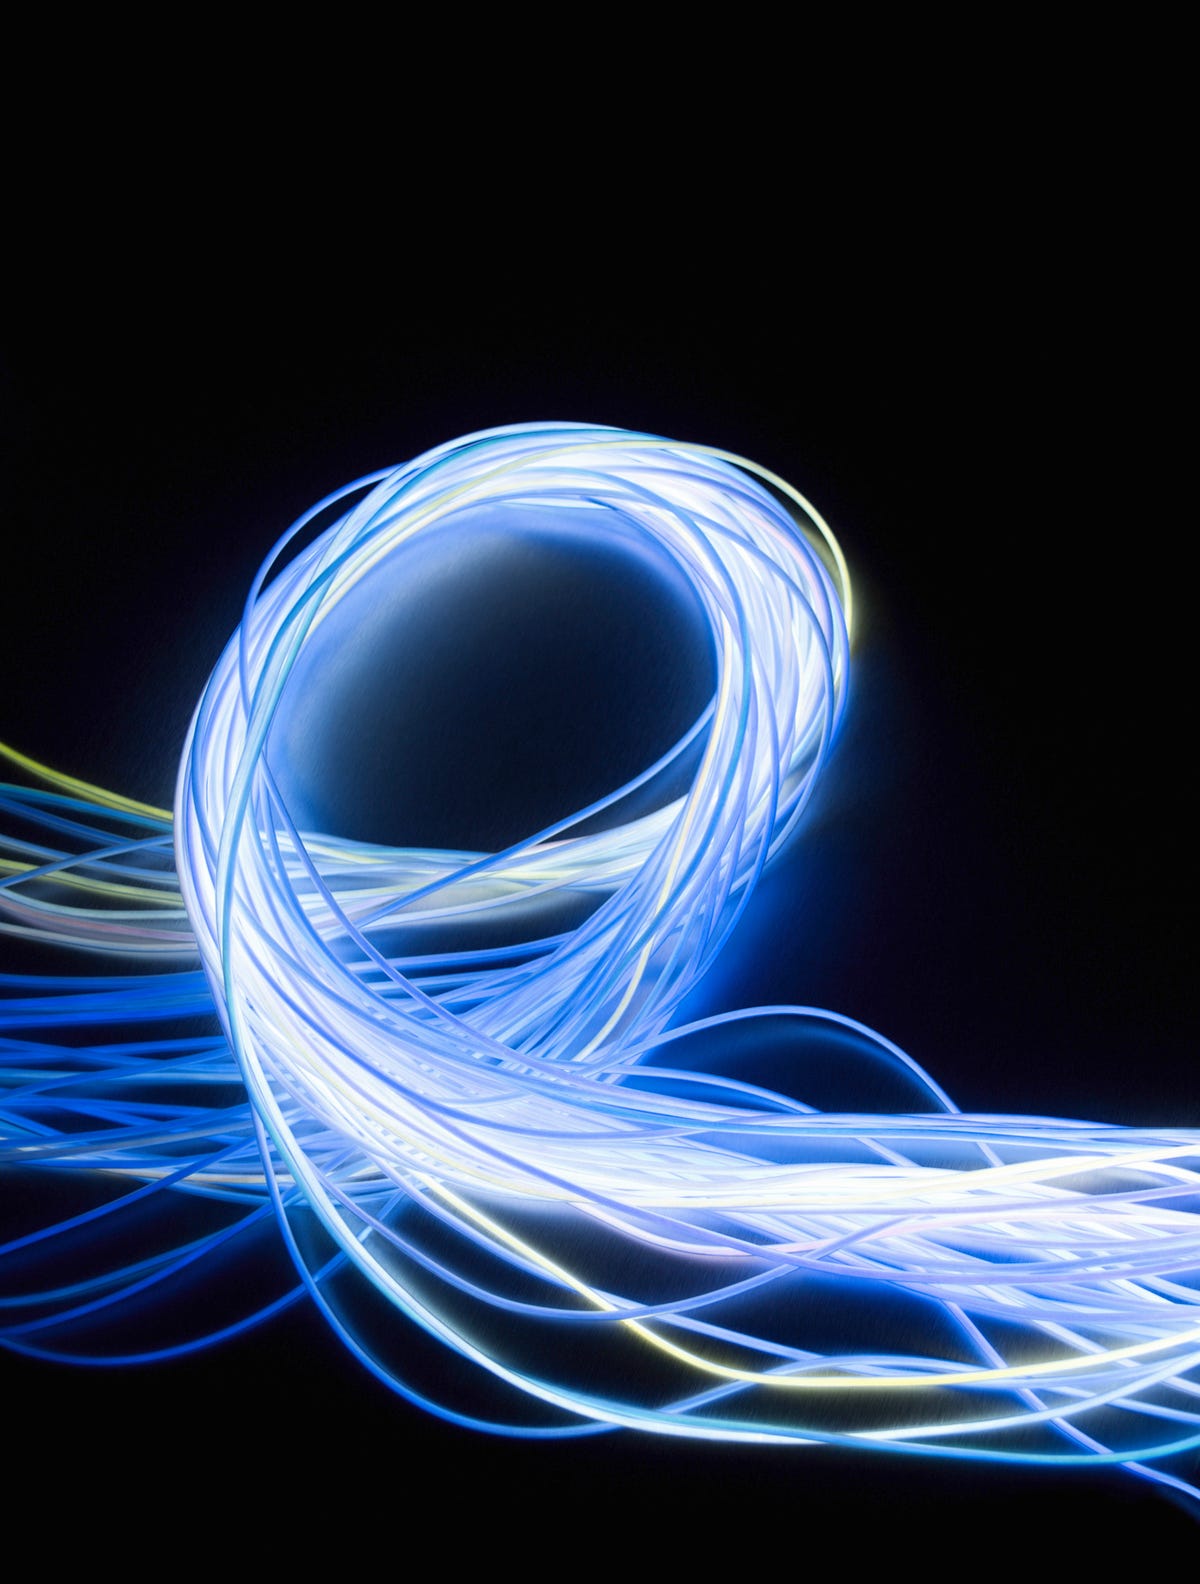 A bundle of fiber optic cables on a black background